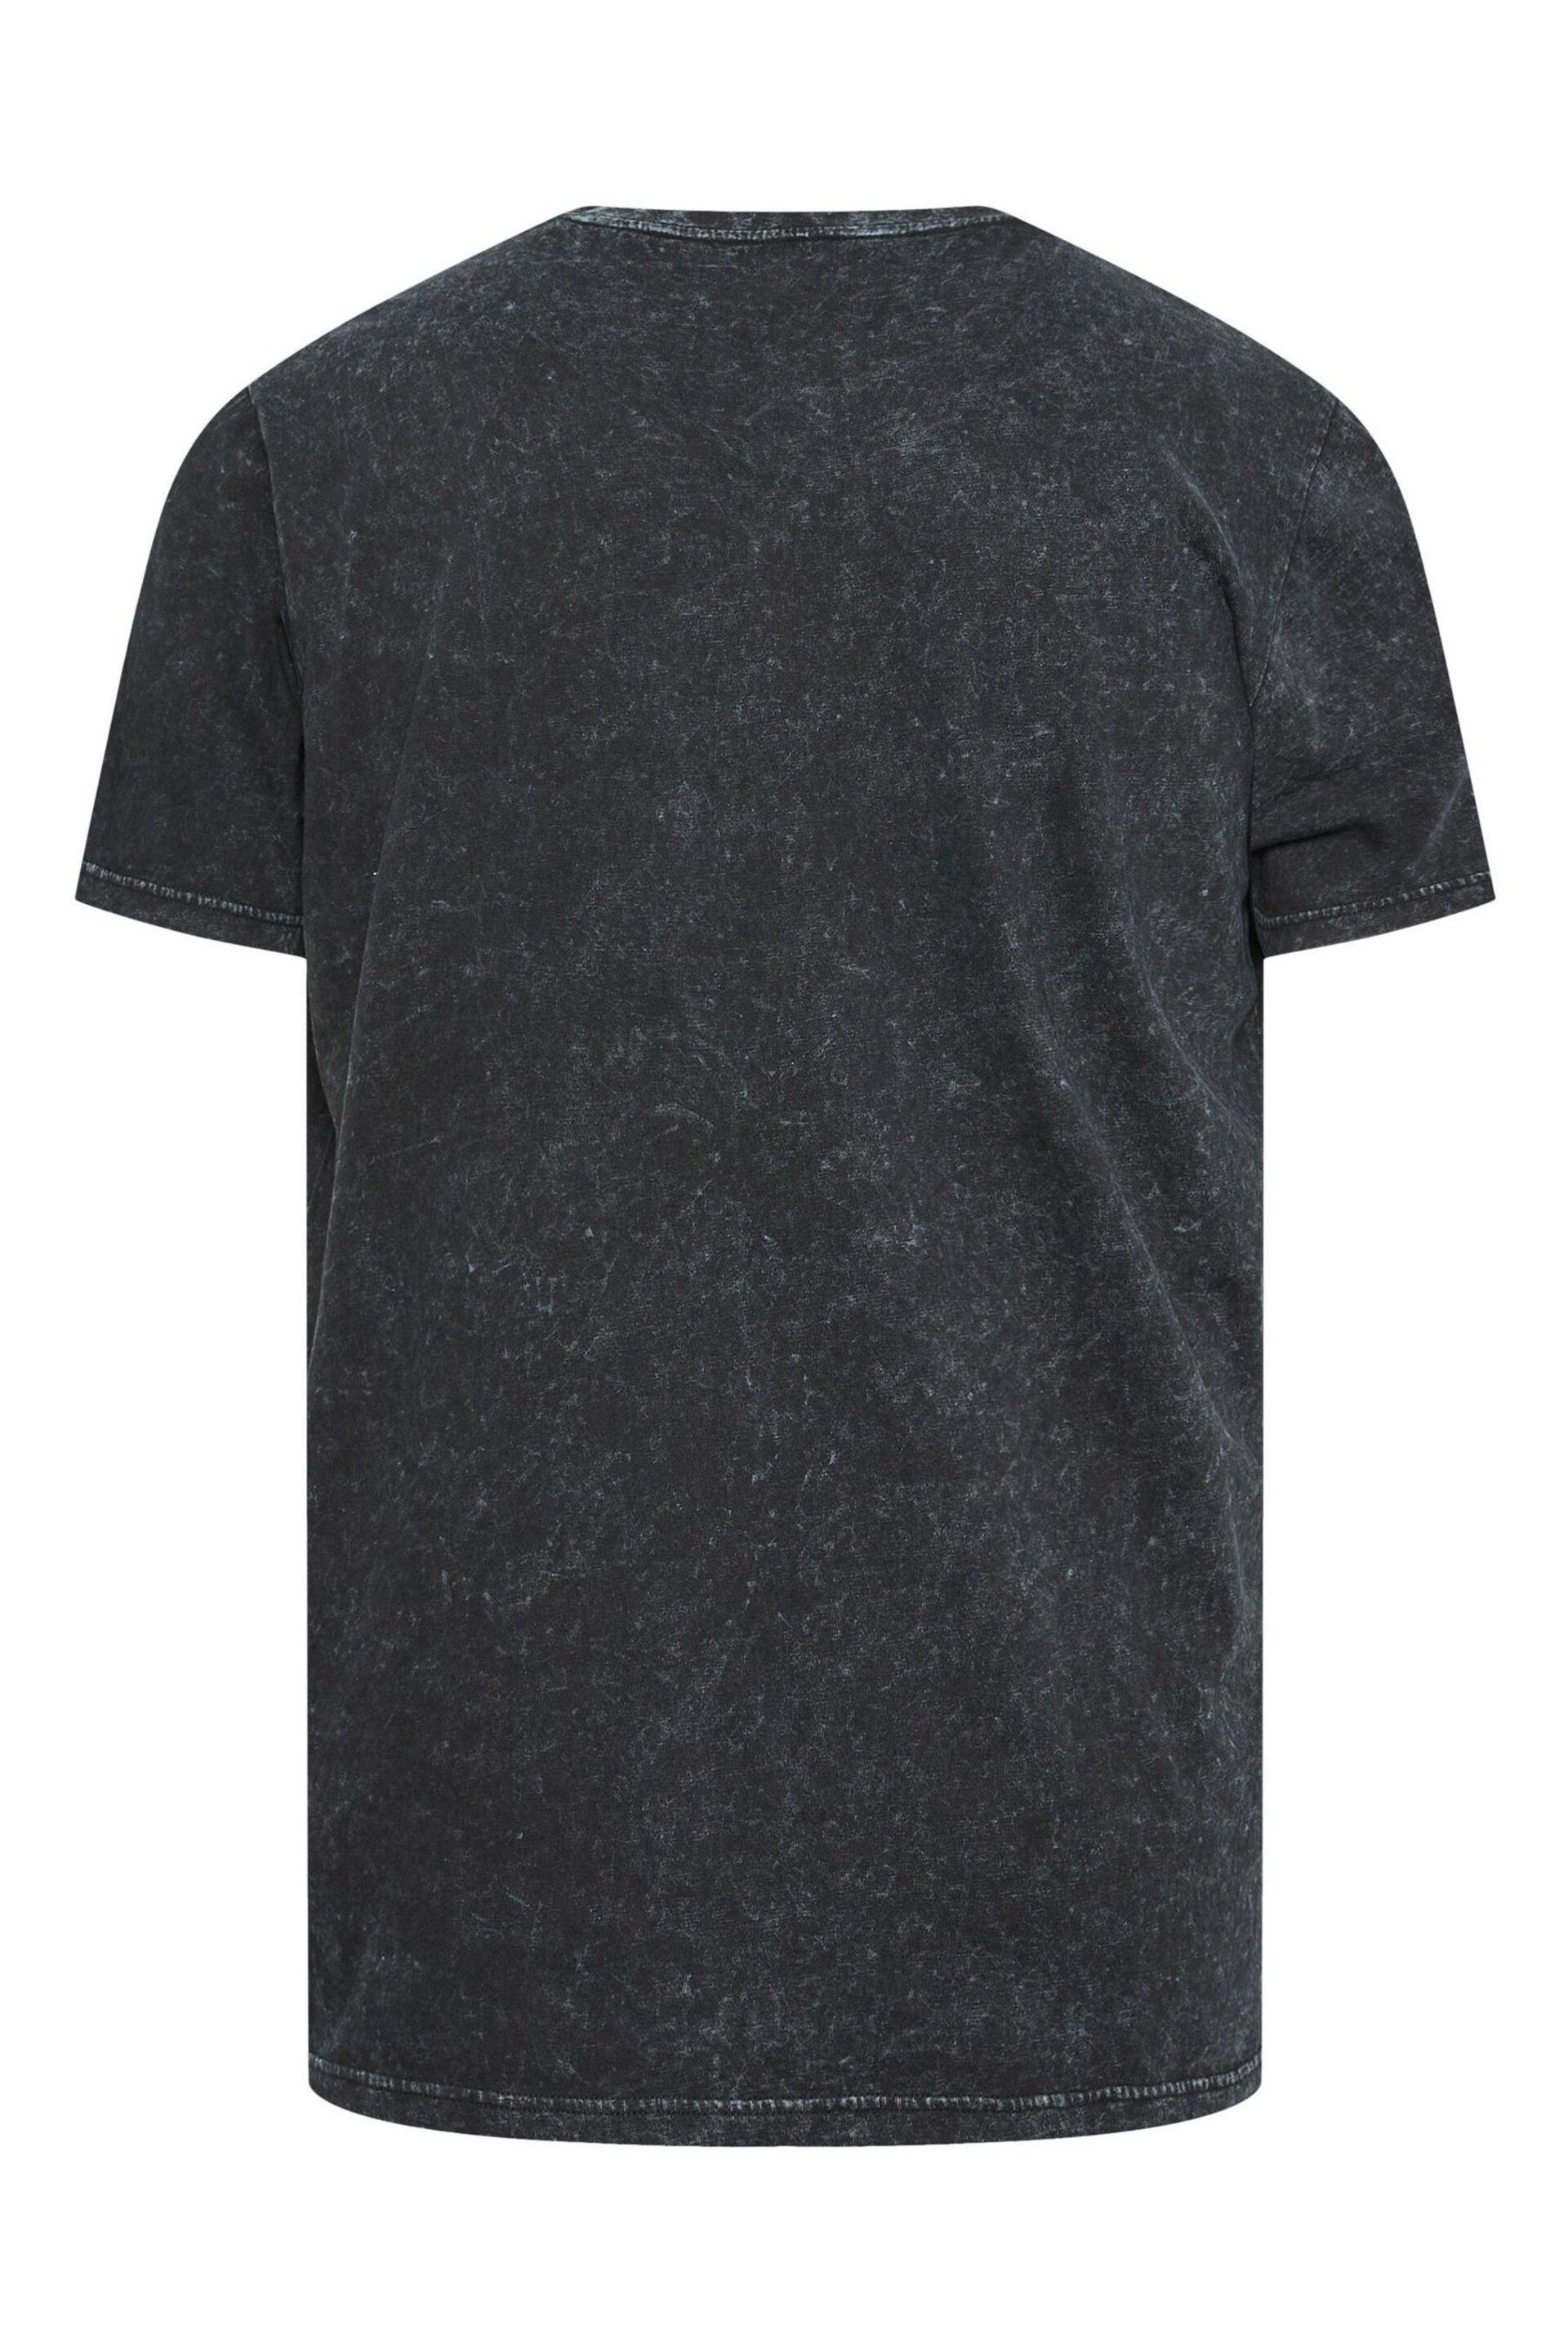 BadRhino Big & Tall Grey Acid Wash Printed T-Shirt - Image 3 of 3